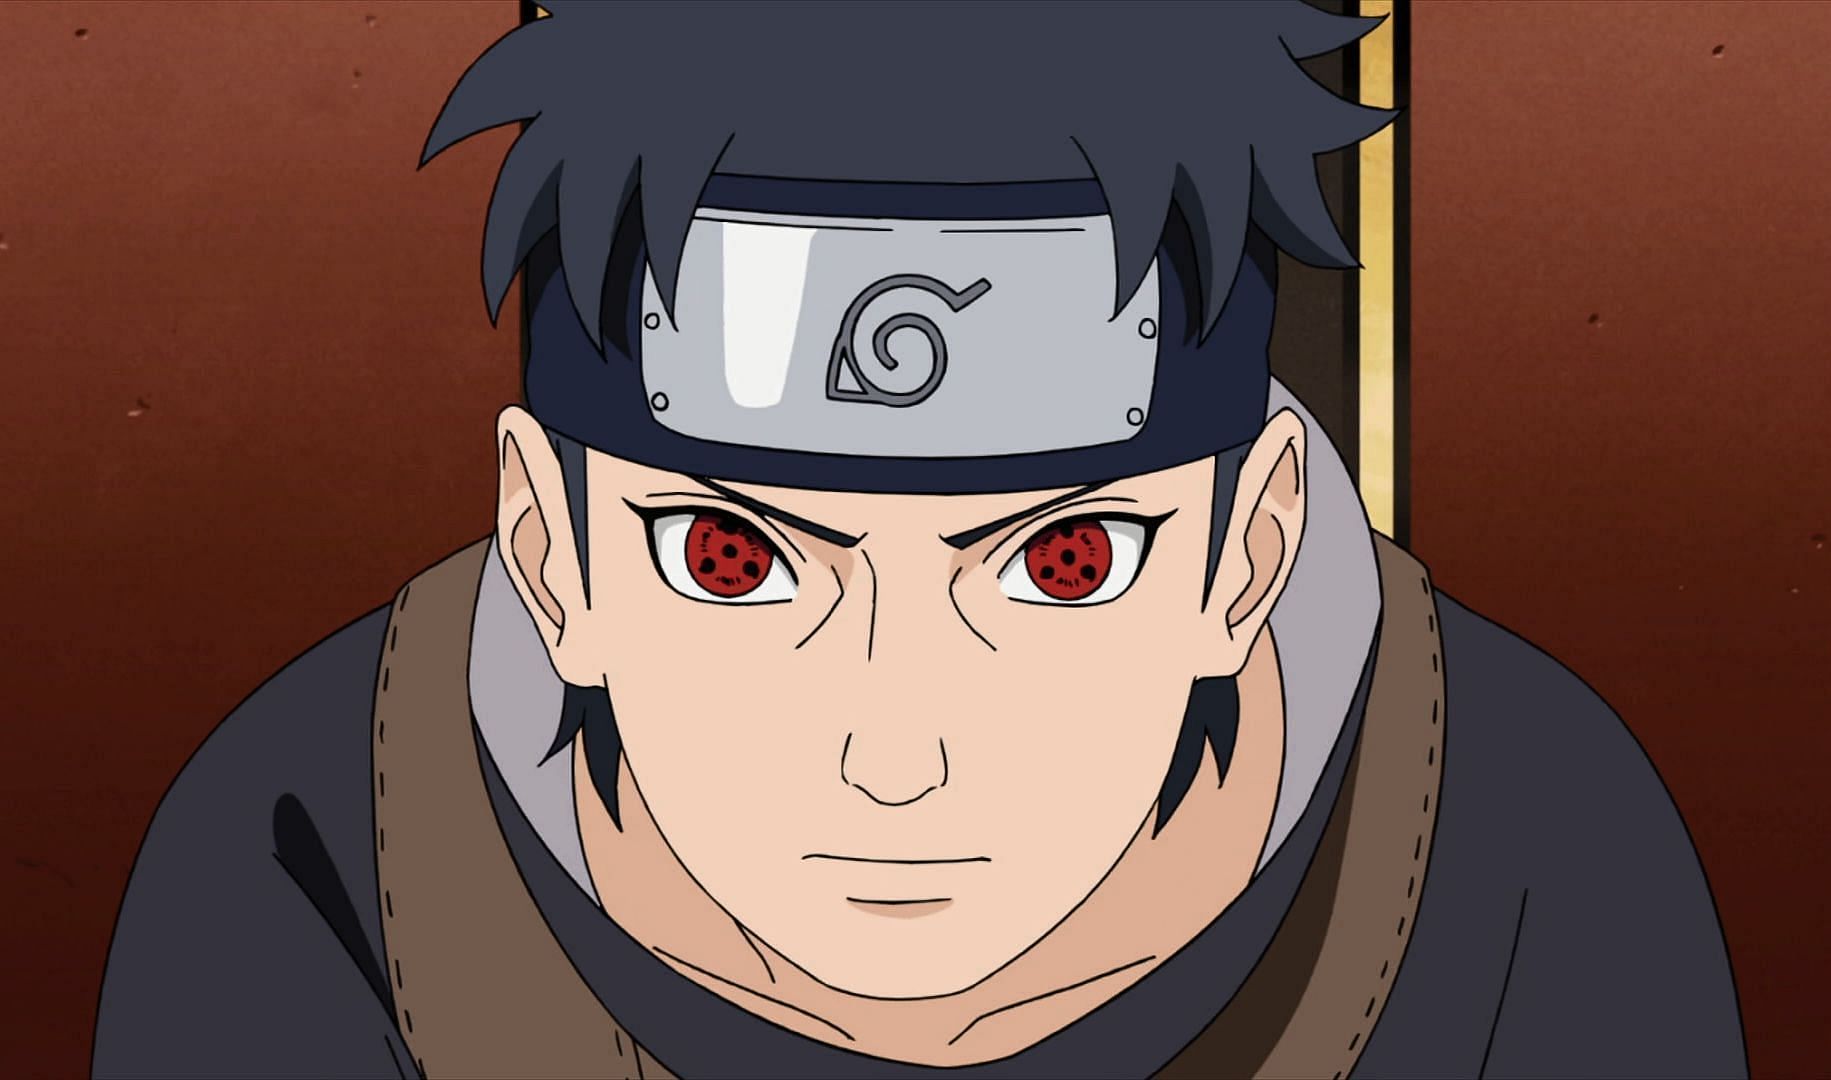 Shisui Uchiha as seen in the anime Naruto (Image via Studio Pierrot)